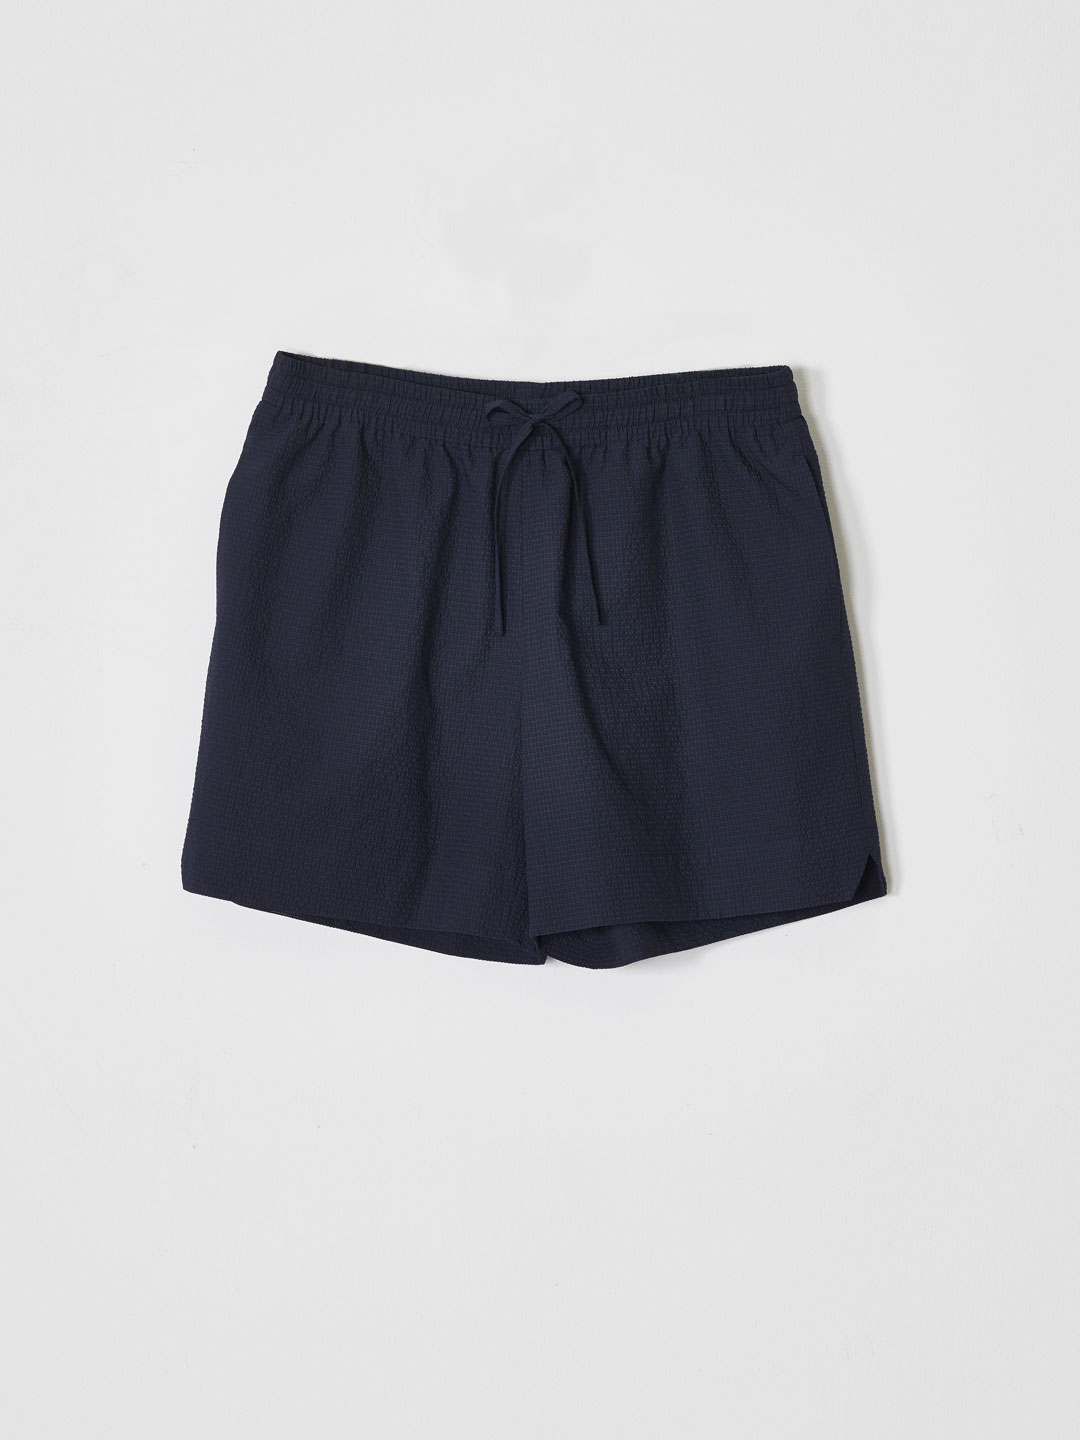 Easy Shorts - Navy